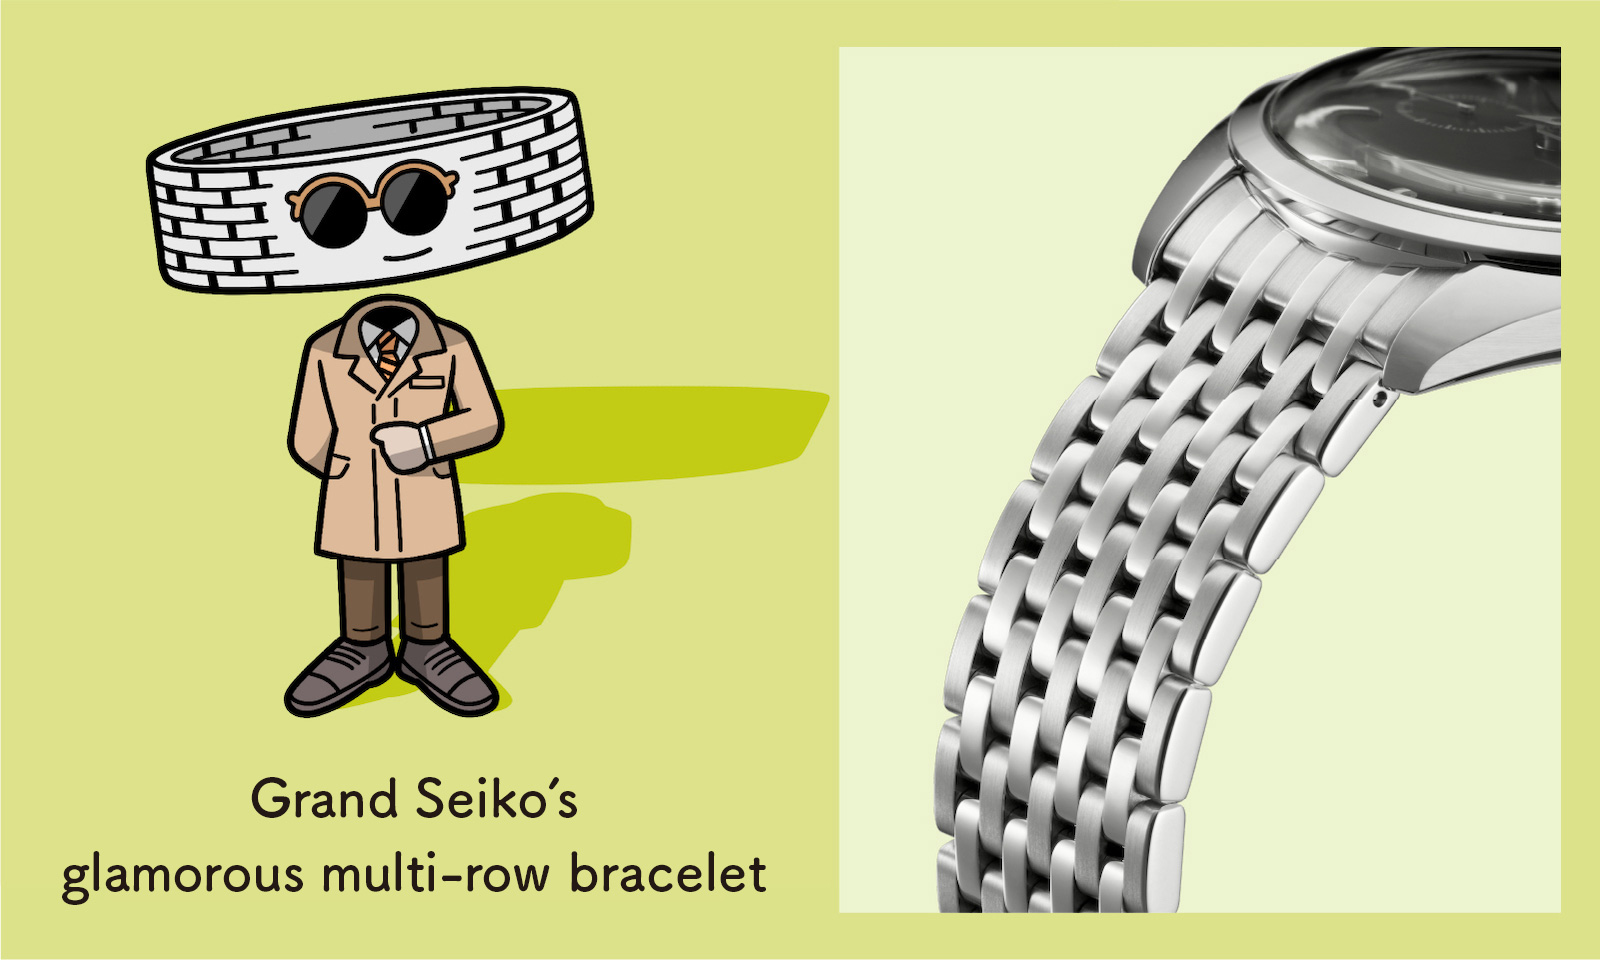 Grand Seiko’s glamorous multi-row bracelet (Enlarged photo of the bracelet)